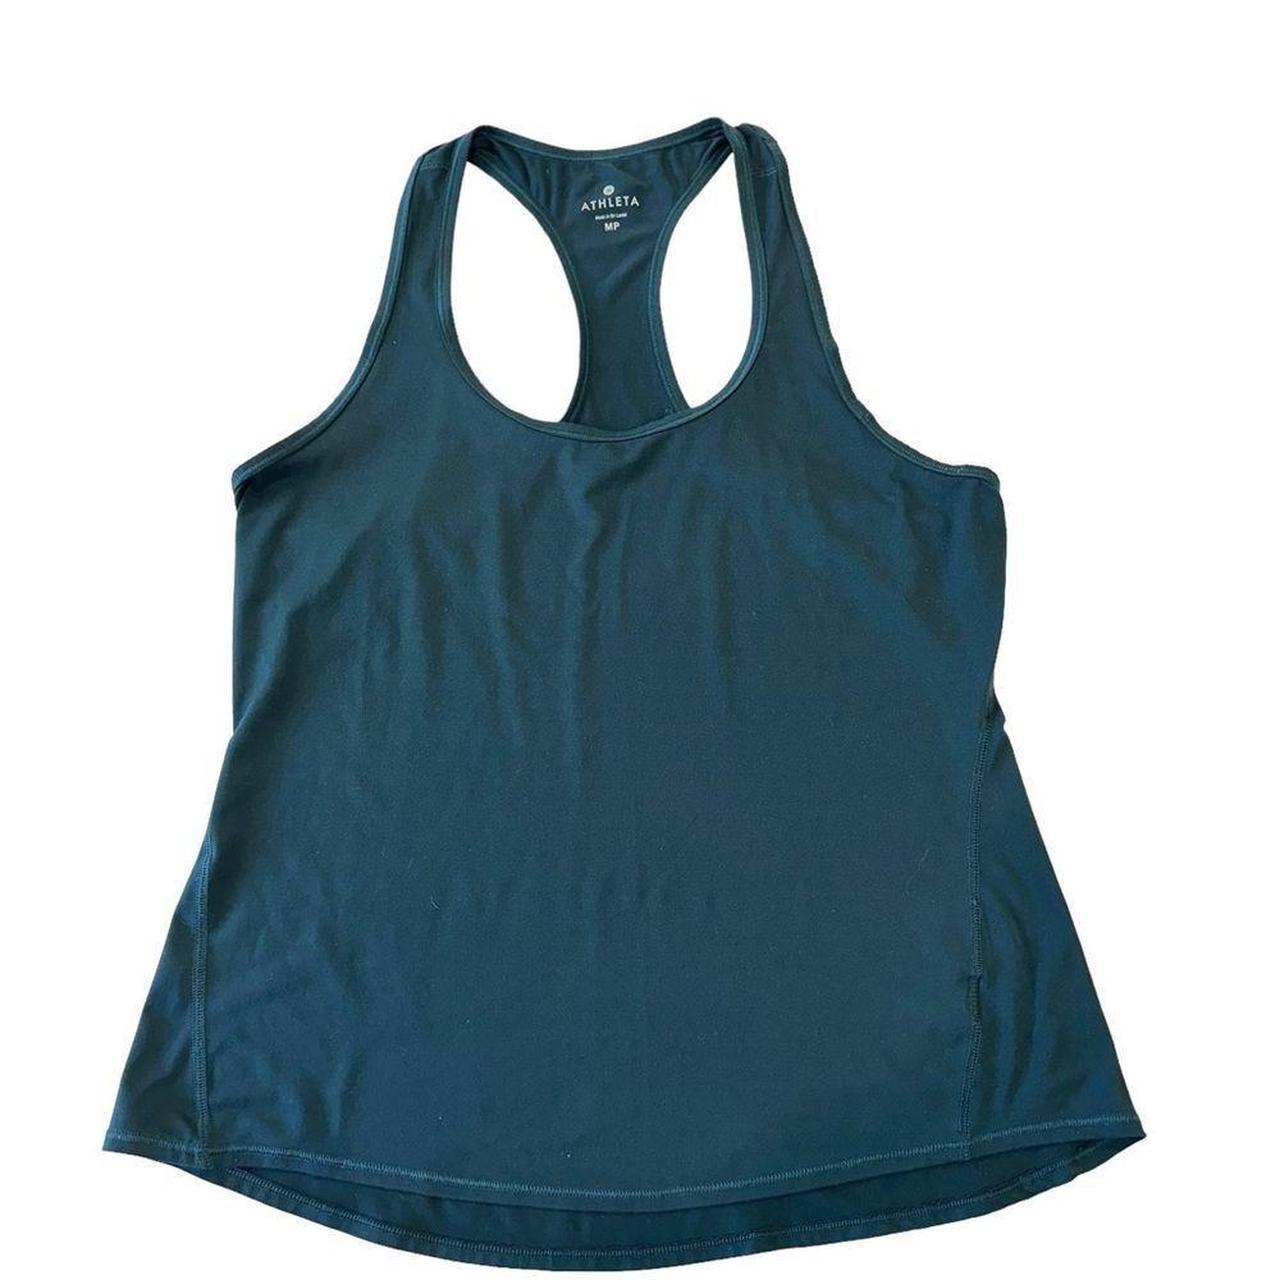 Athleta Womens Top Size Small Blue Racerback Tank Shirt Athletic